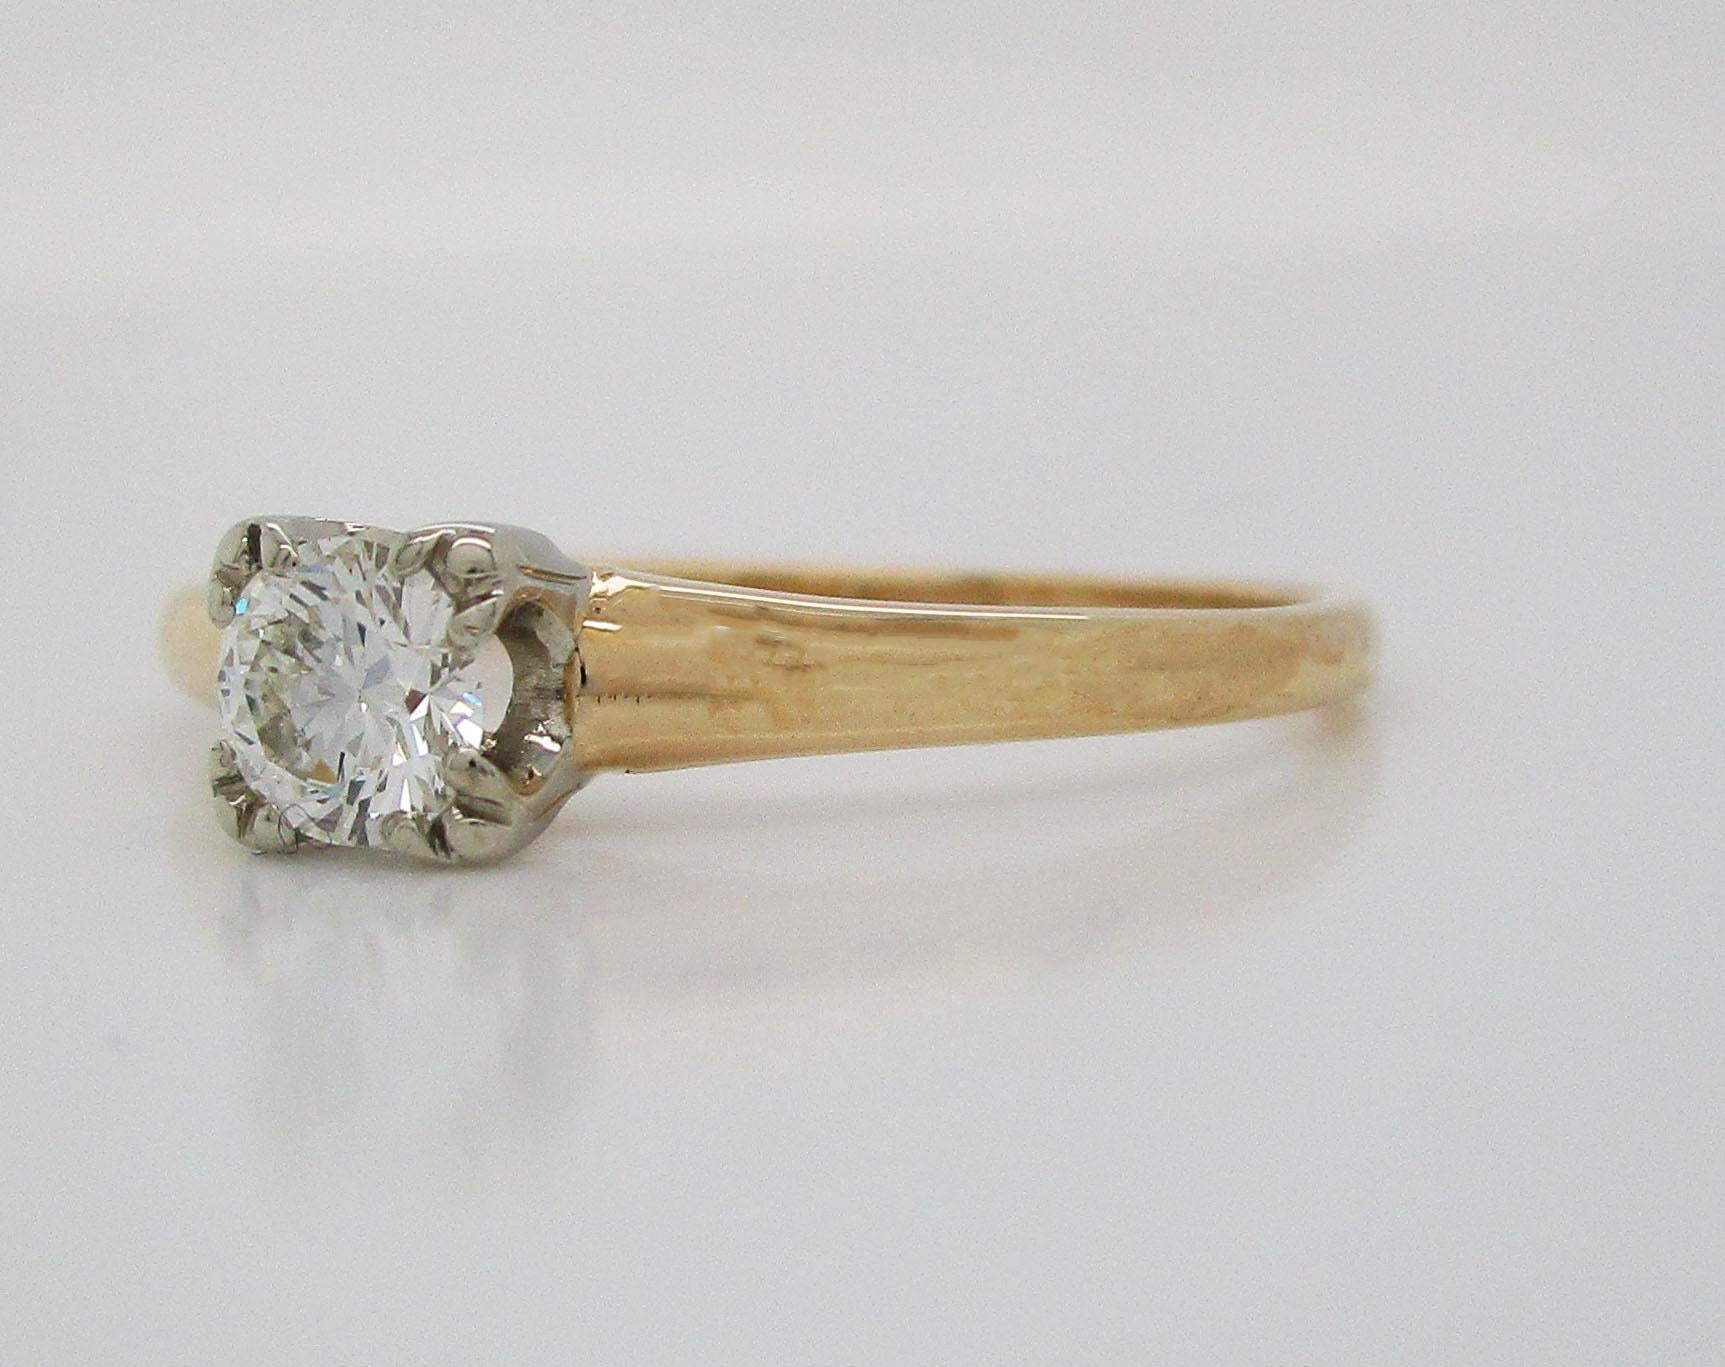 Modernist Vintage 14 Karat White and Yellow Gold Diamond Engagement Ring